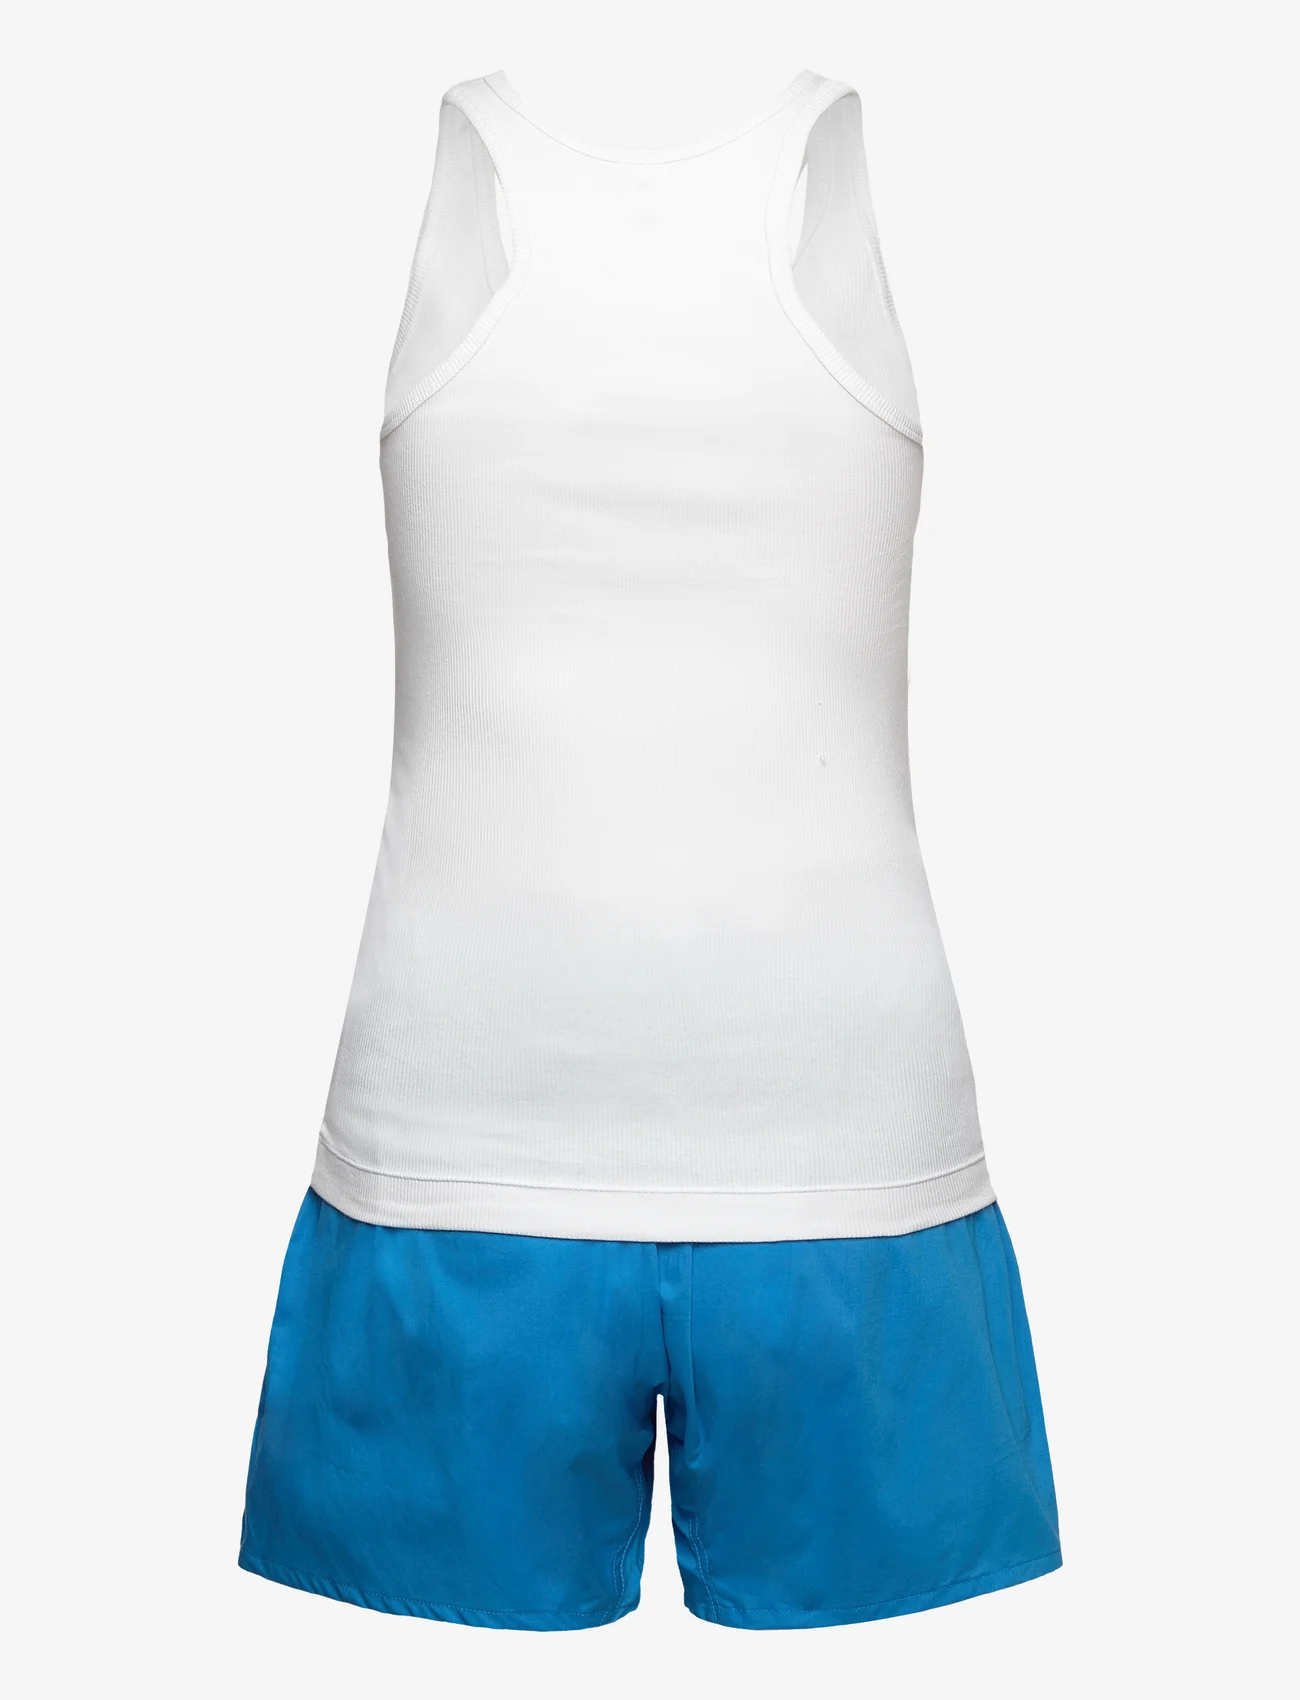 Calvin Klein - PJ IN A BAG - verjaardagscadeaus - white top/brilliant blue bottom/bag - 1